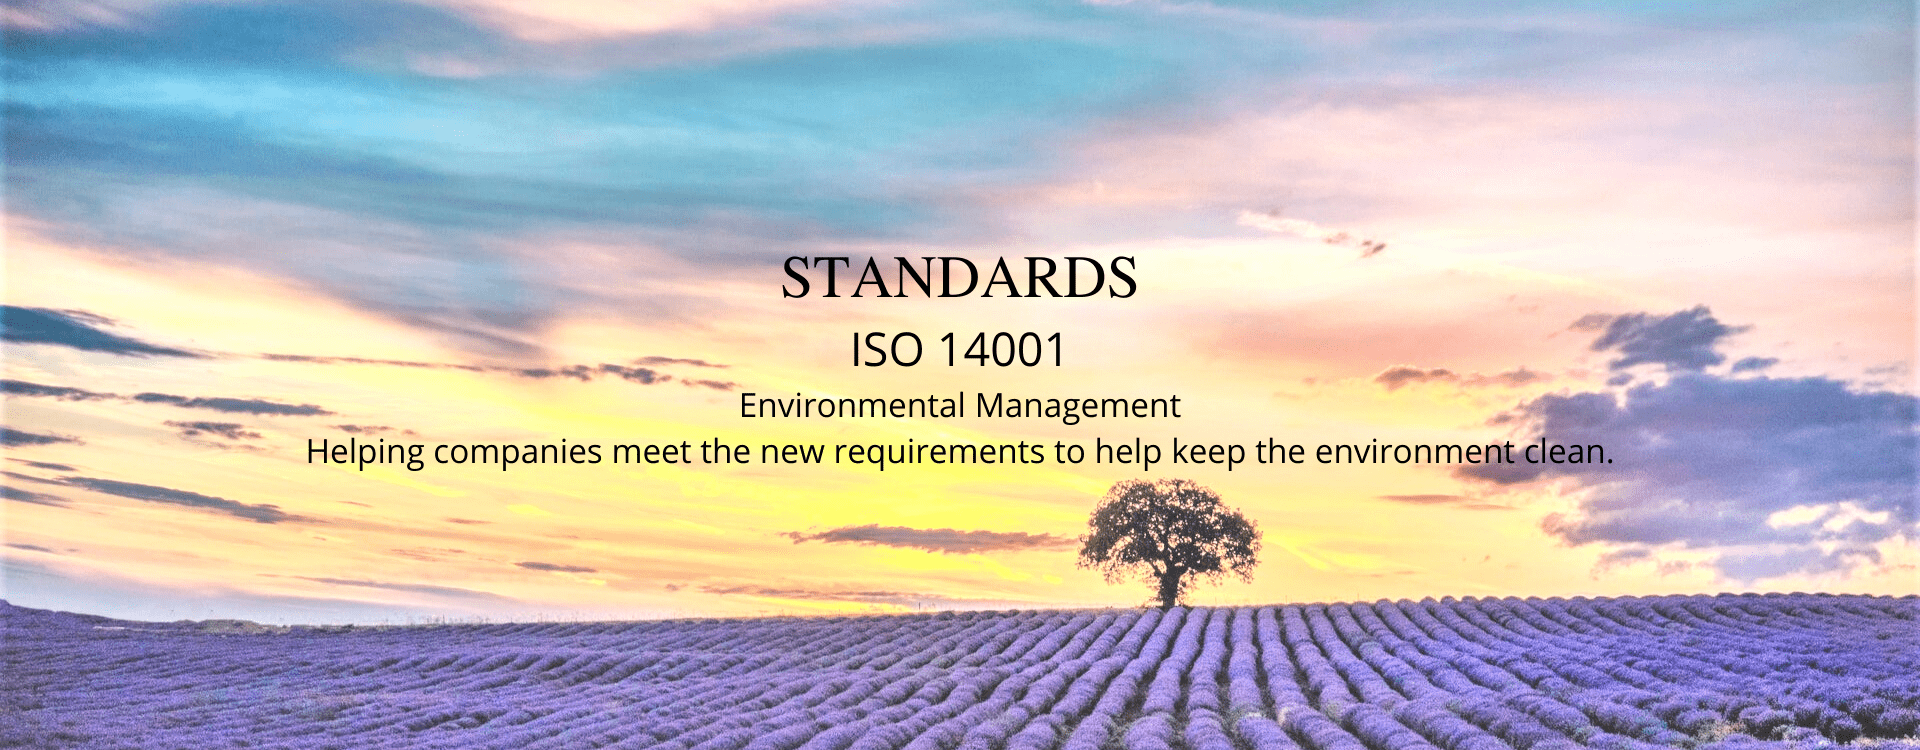 ISO 14001 Environmental Management Standard